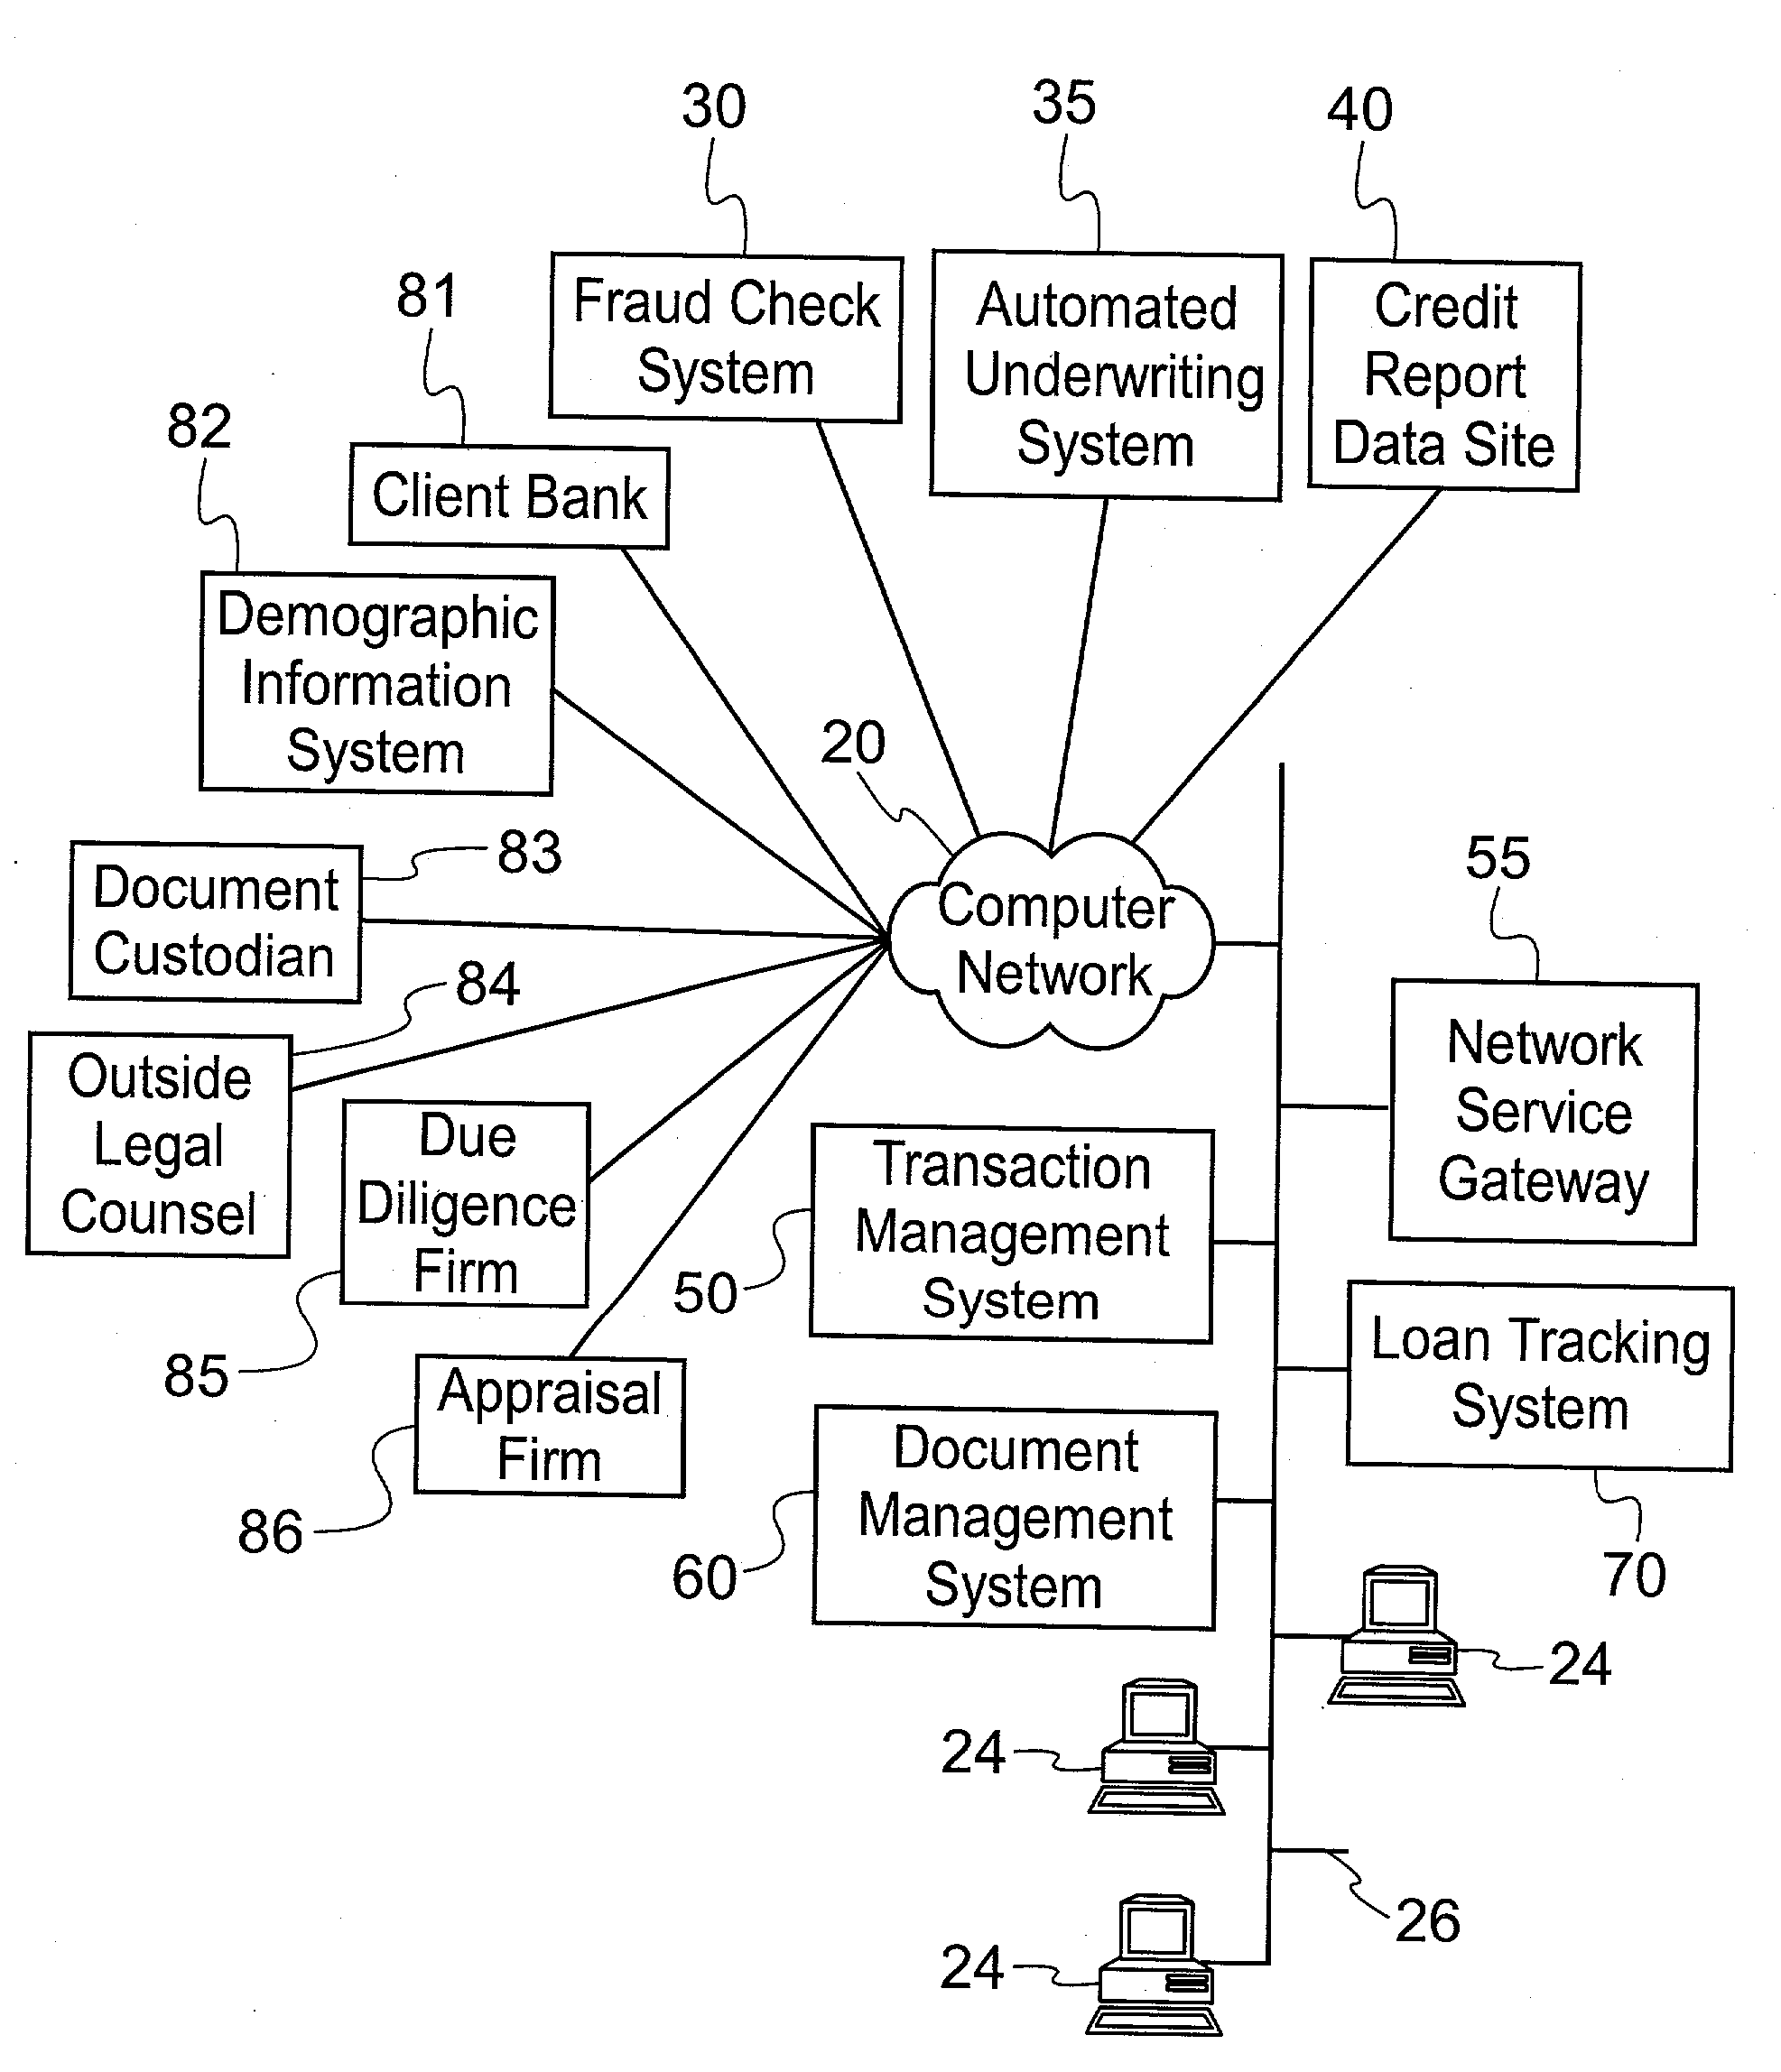 Transaction management system